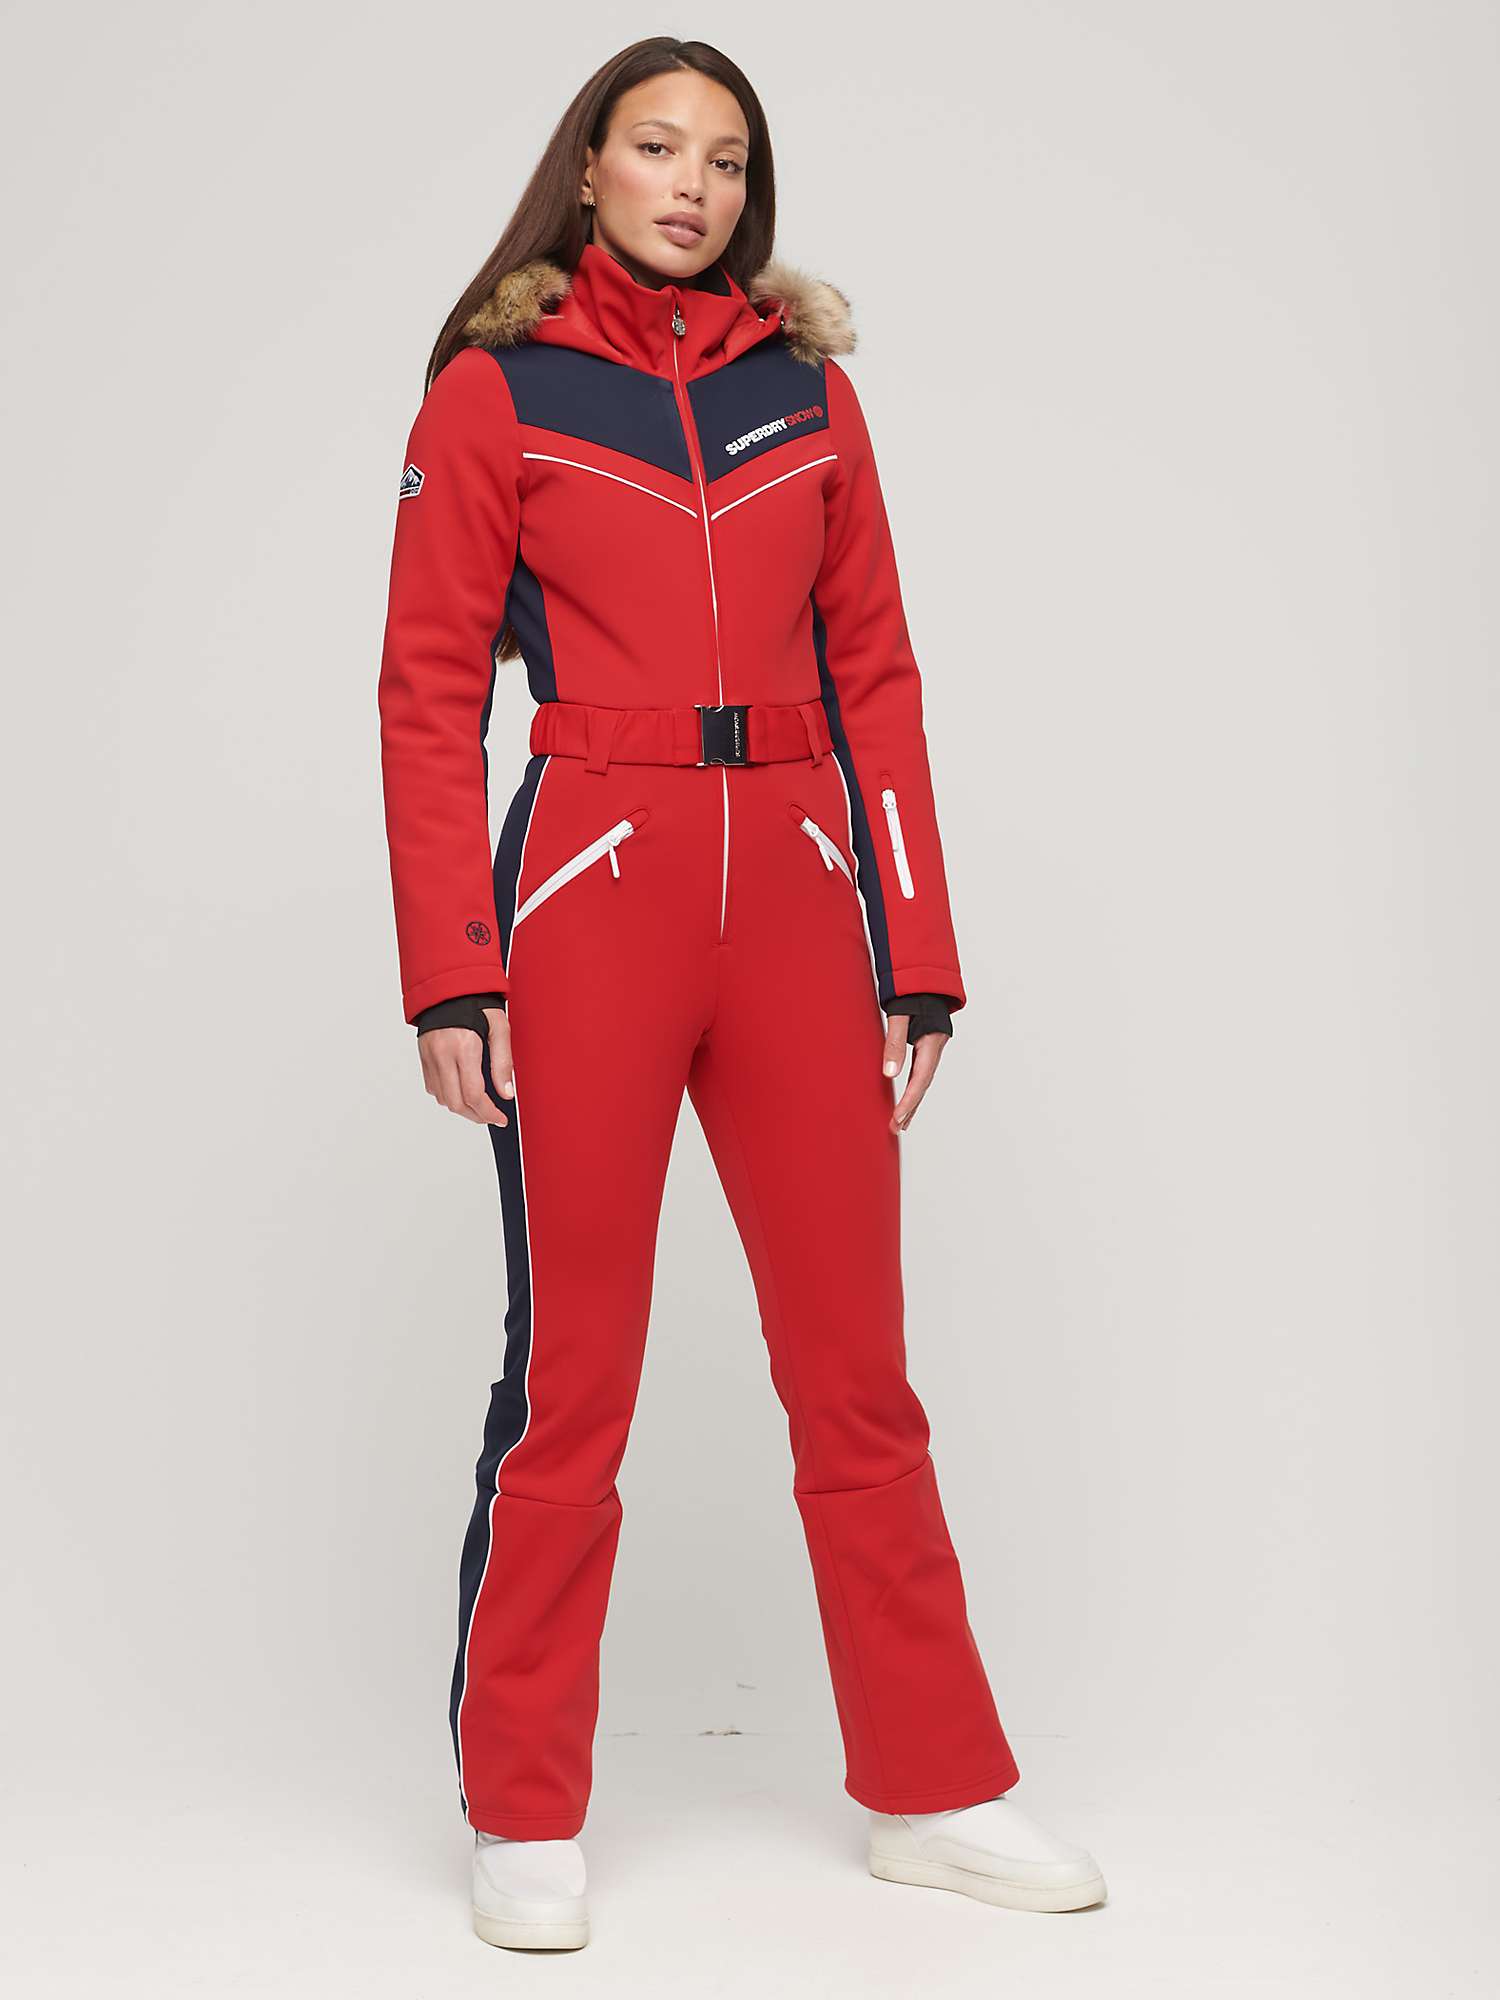 Buy Superdry Women's Ski Suit Online at johnlewis.com